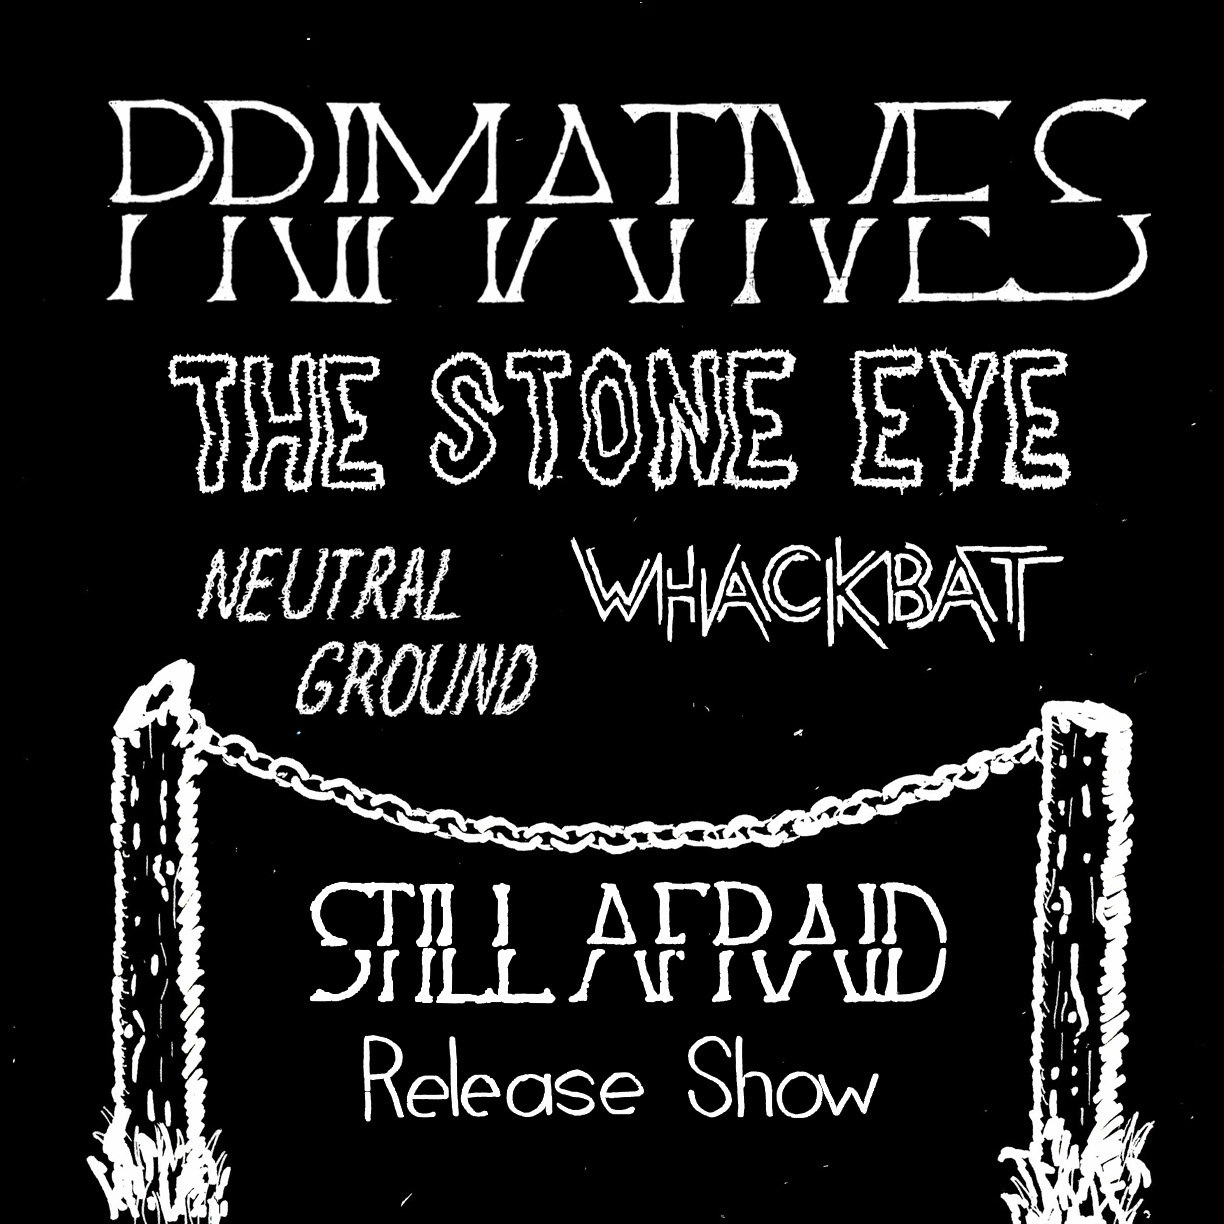 Primatives / The Stone Eye / Neutral Ground / Whackbat